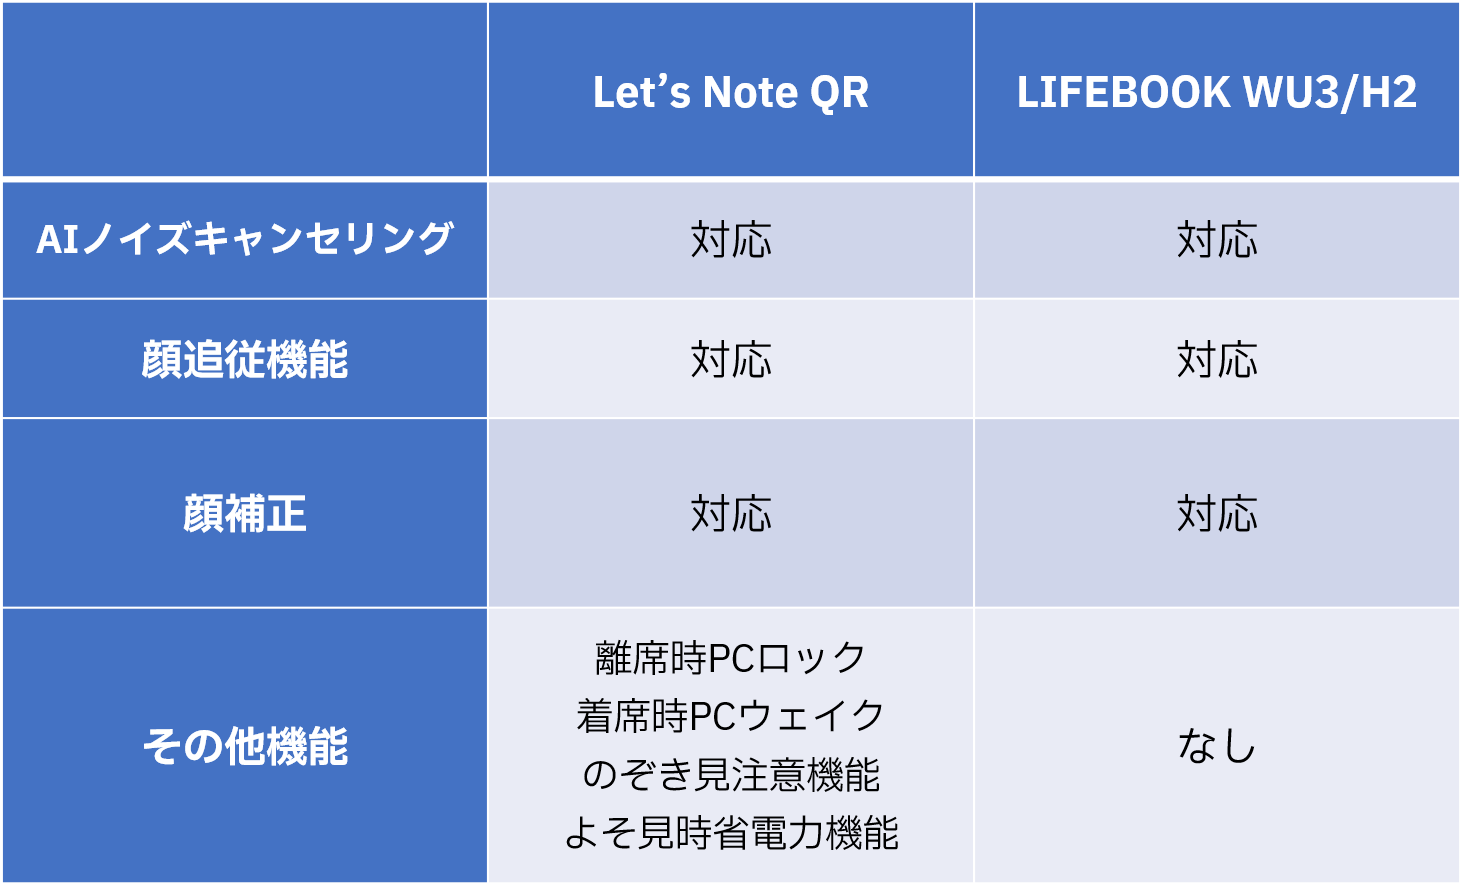 Let's Note QRとLIFEBOOK WU3/H2に搭載されているAIを活用した機能